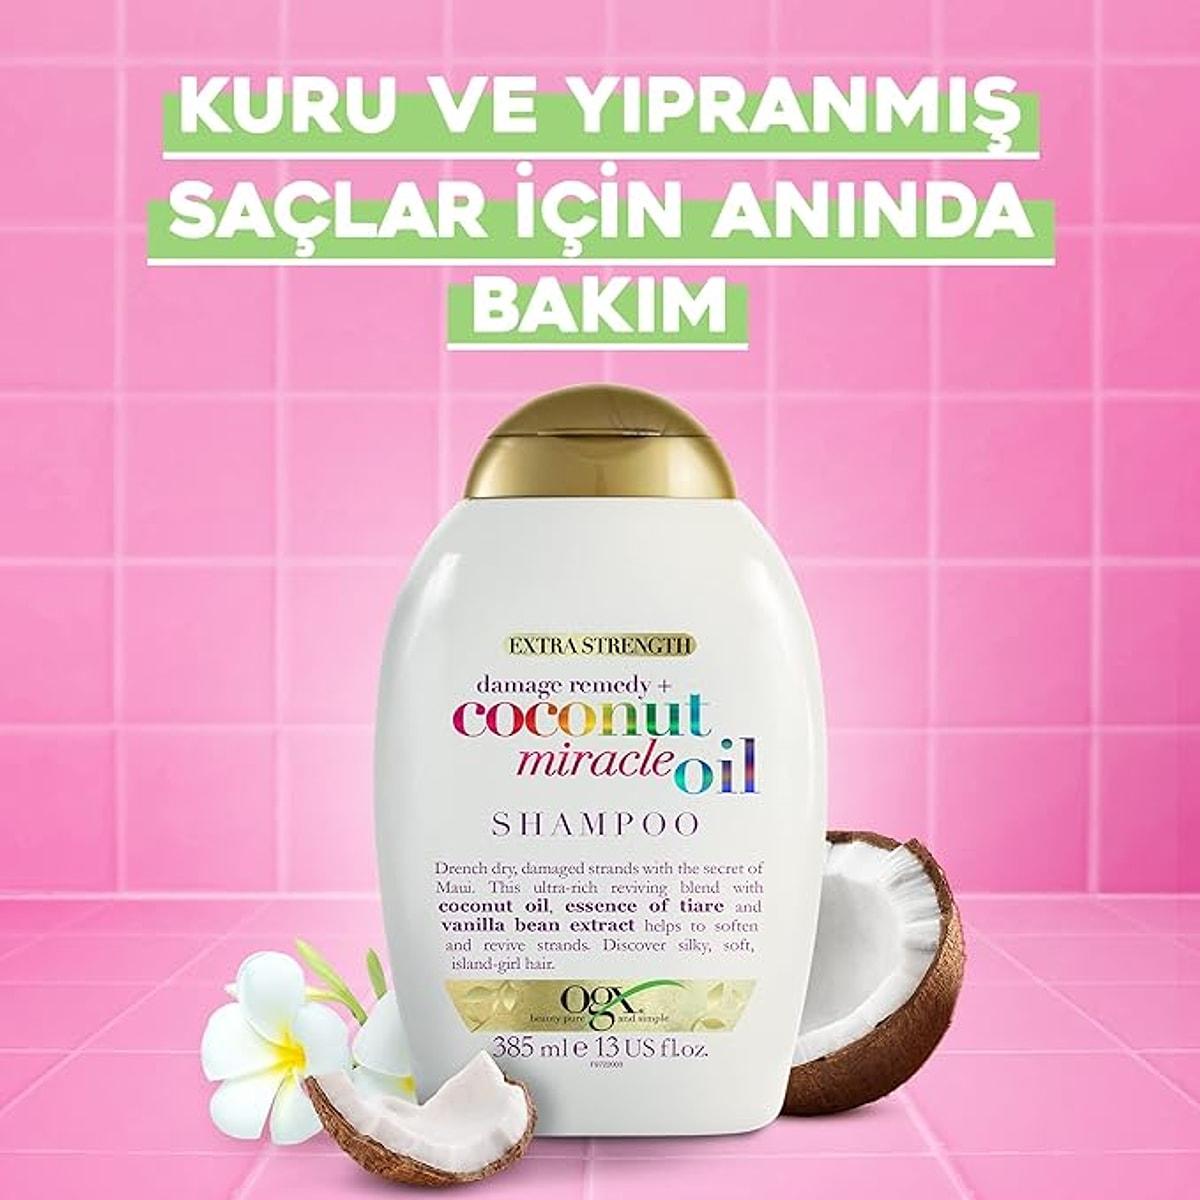 6. OGX Yıpranma Karşıtı Coconut Miracle Oil Sülfatsız Şampuan